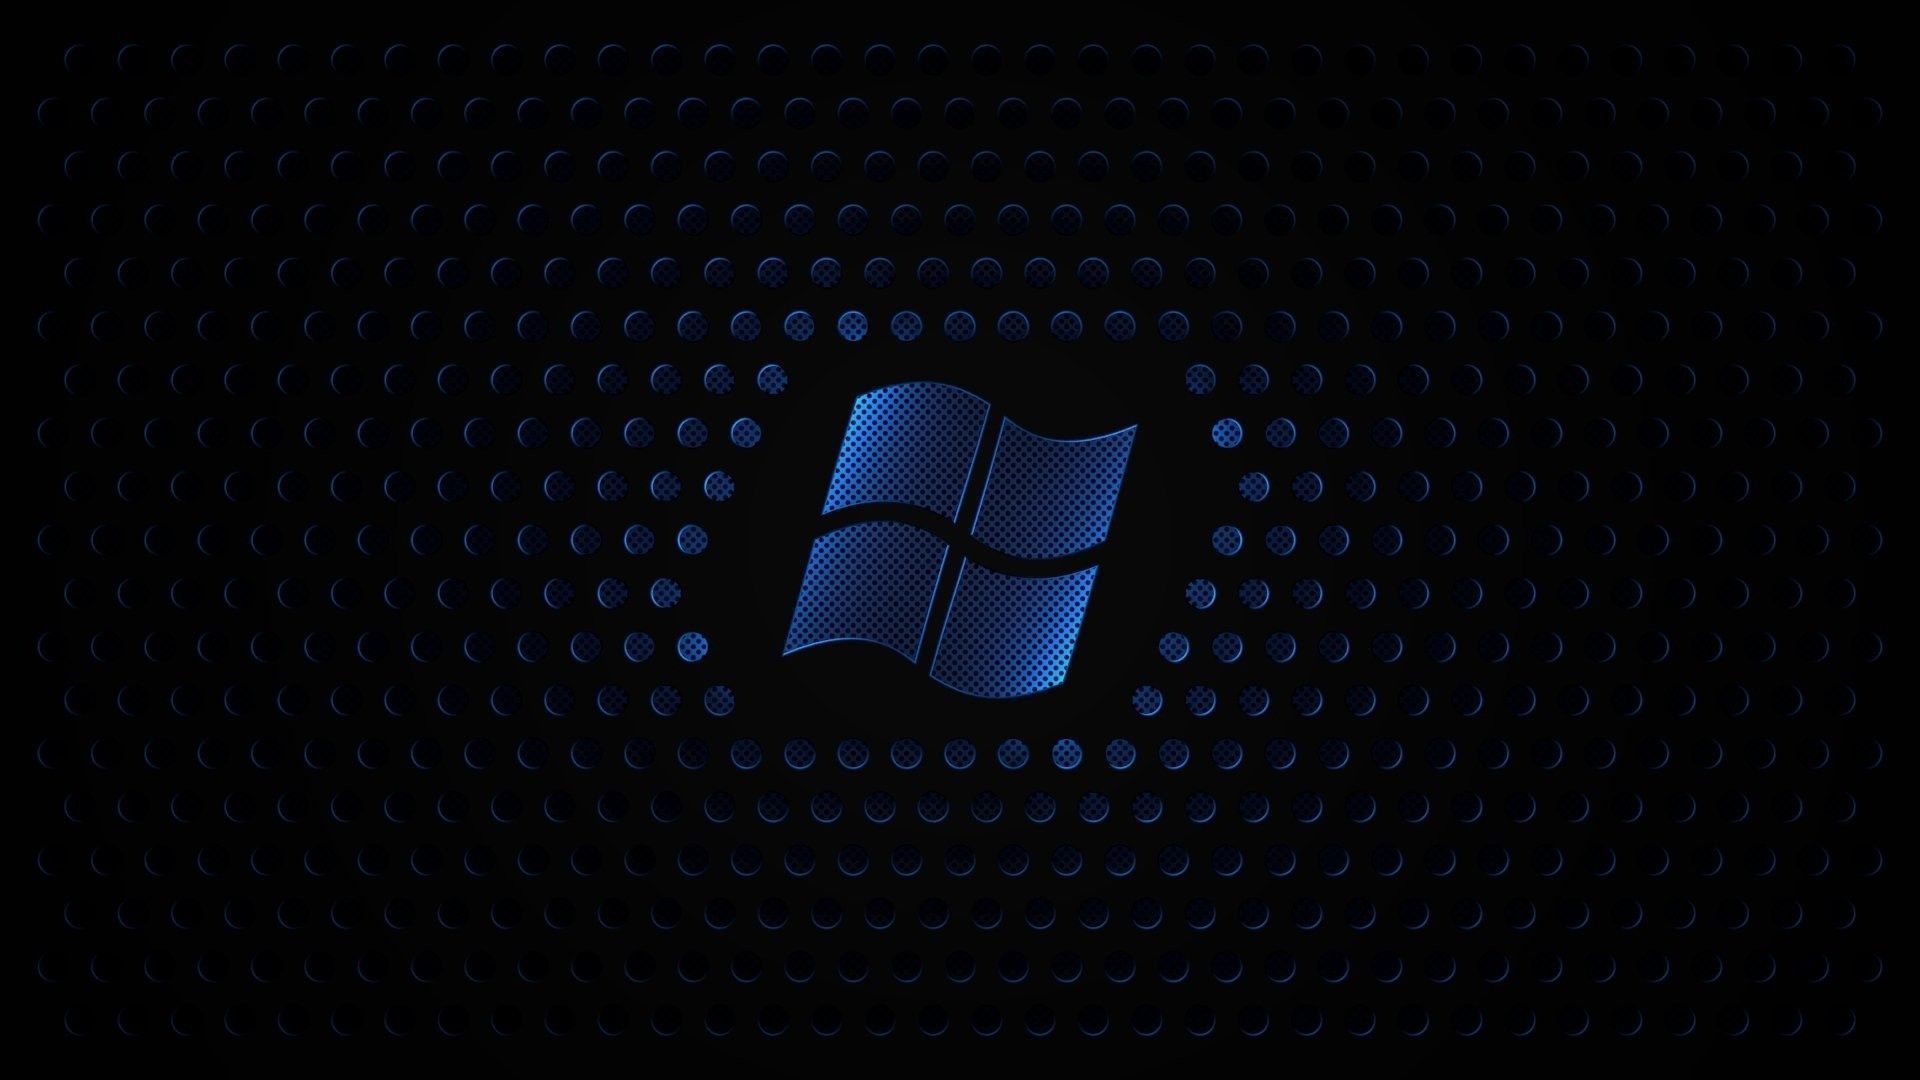 hd wallpaper Windows Xp Microsoft Logos | wallpapers55.com - Best ...